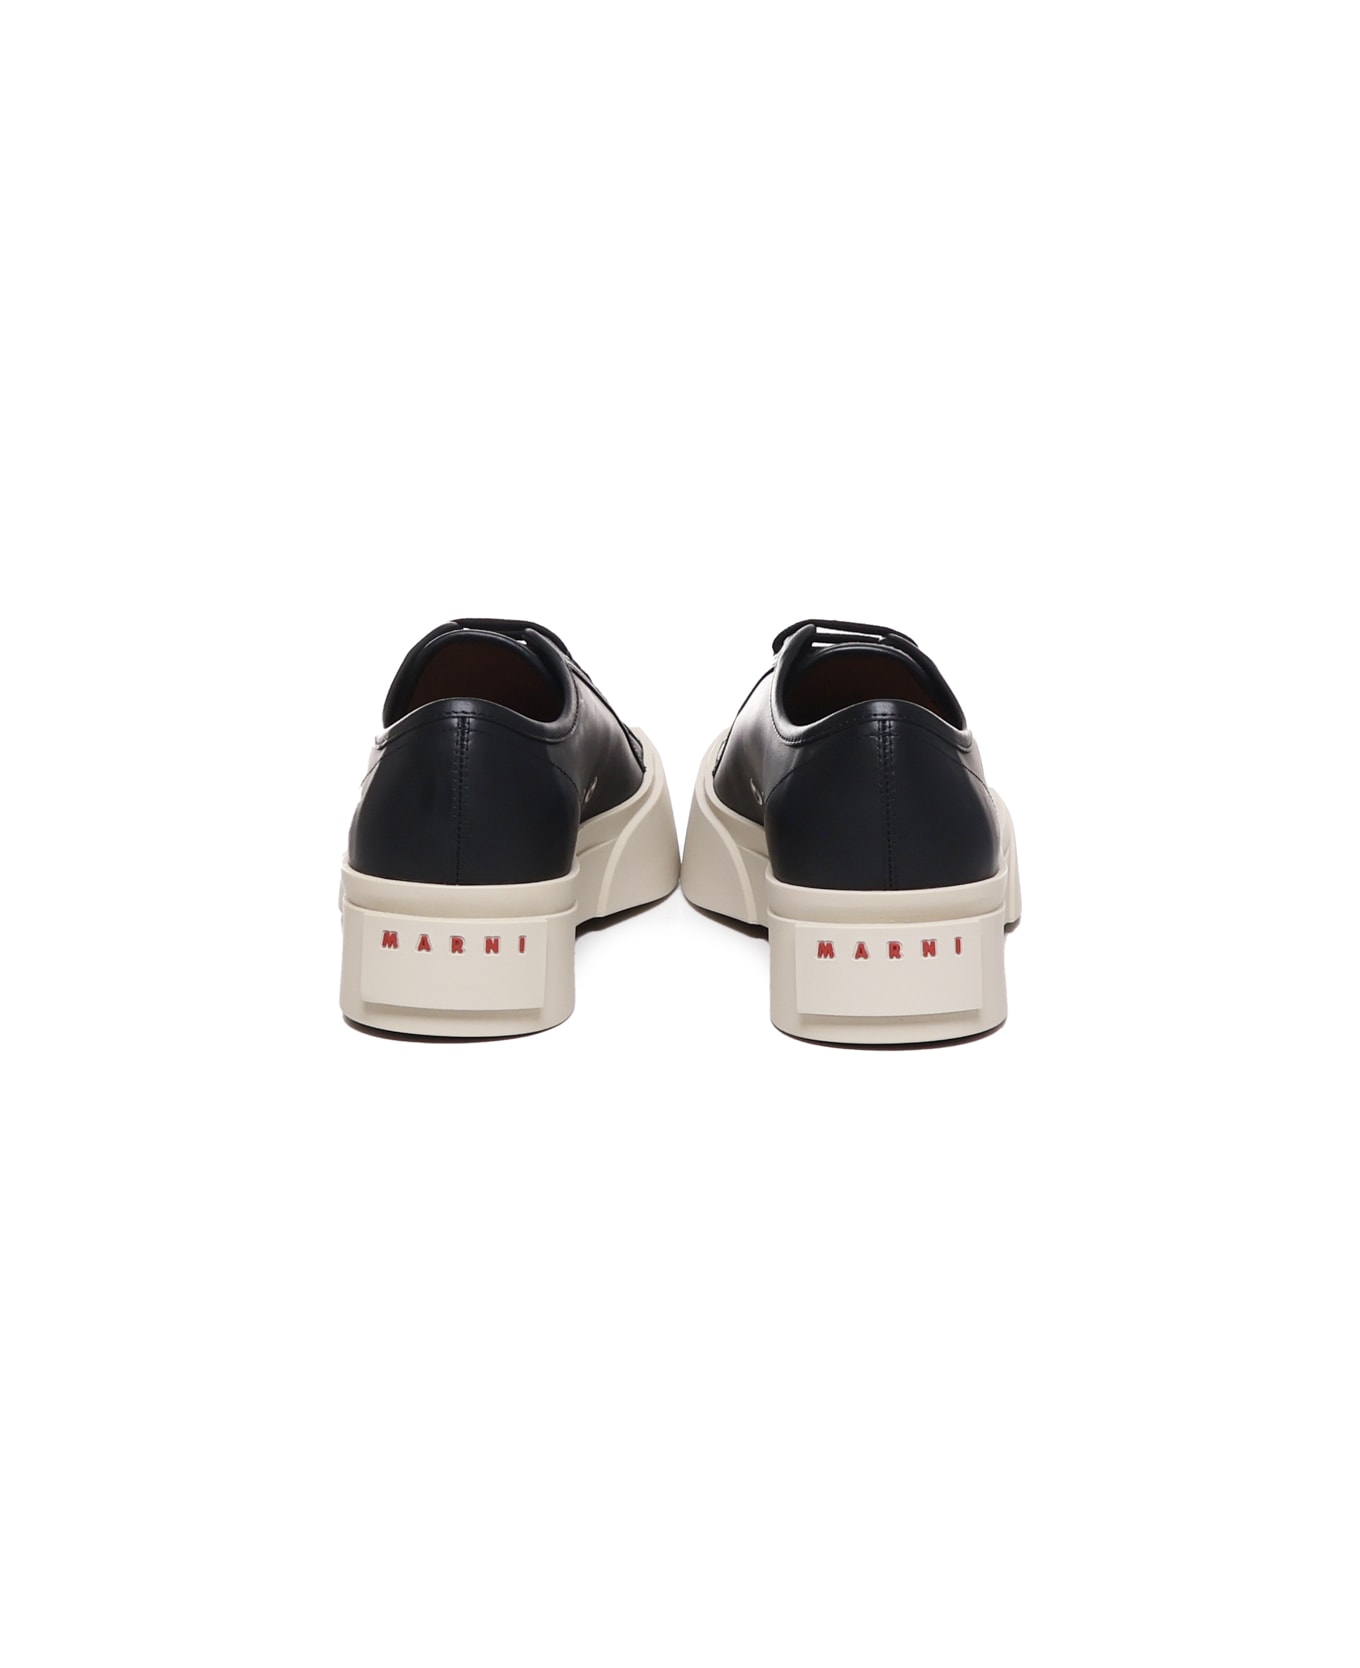 Marni Pablo Sneakers In Calfskin - Black スニーカー